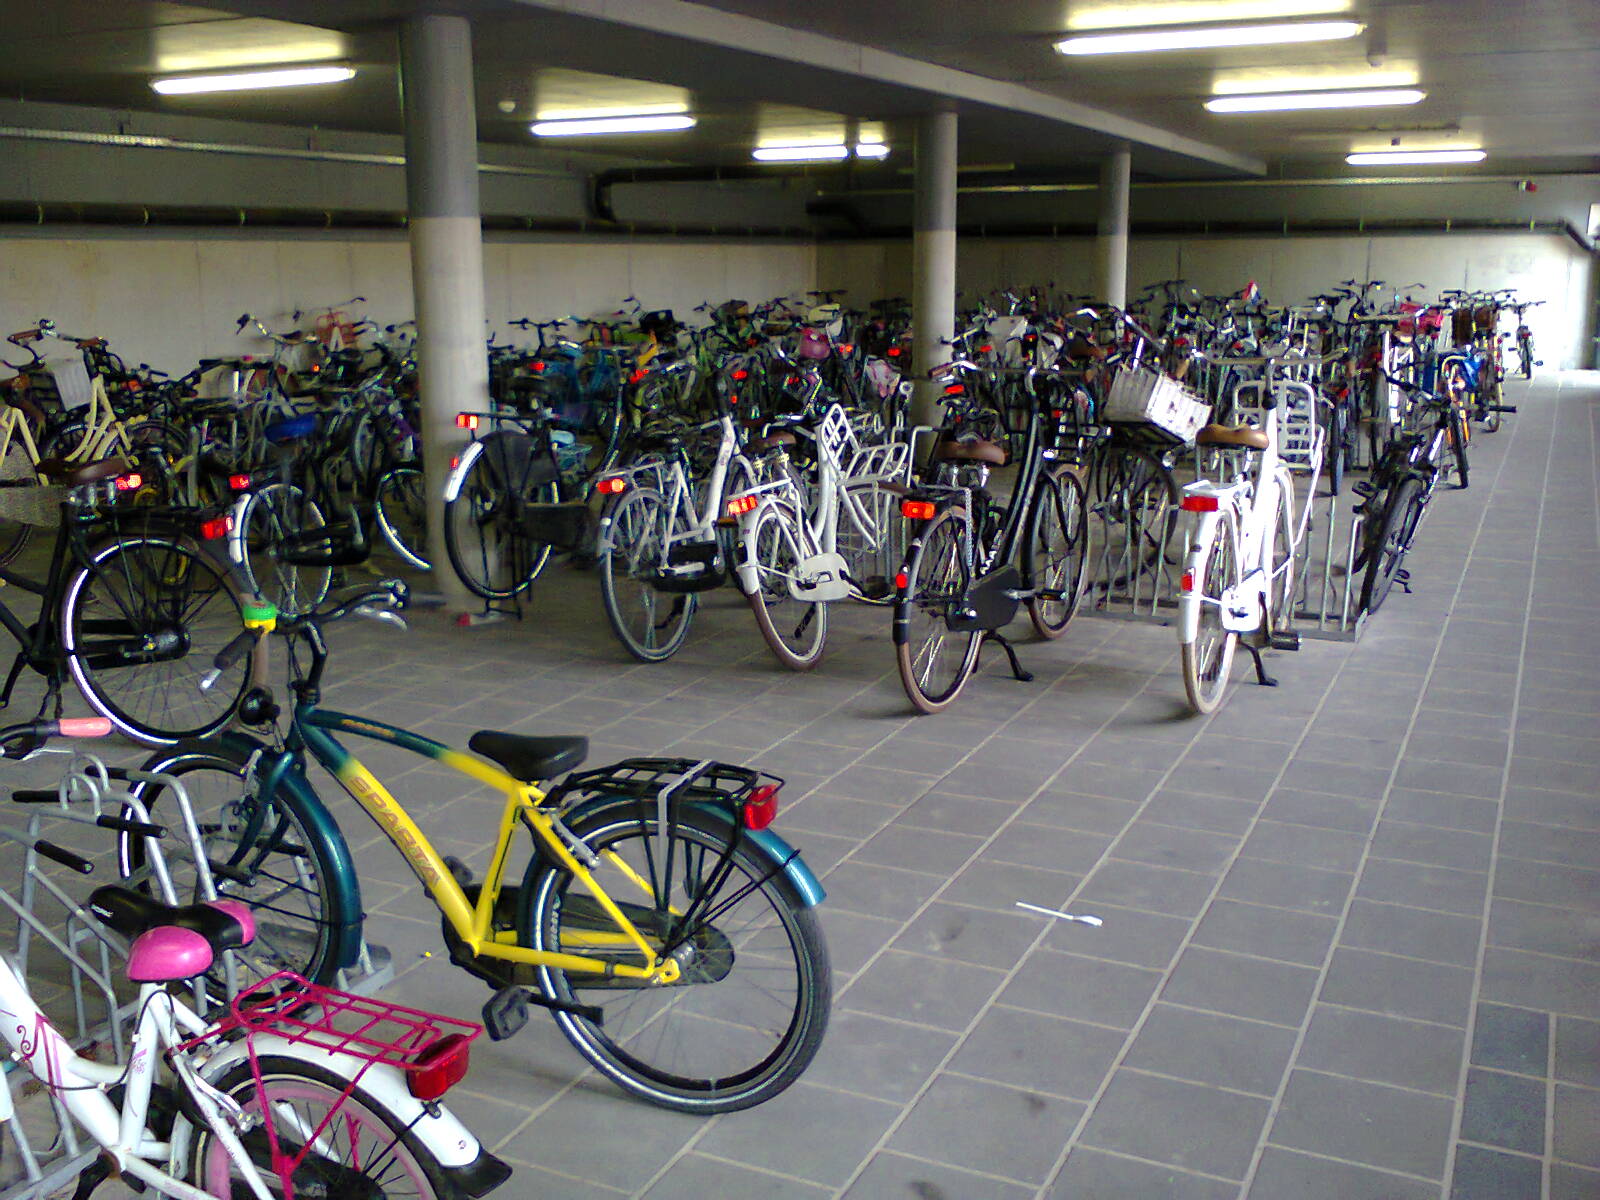 School cycle parking